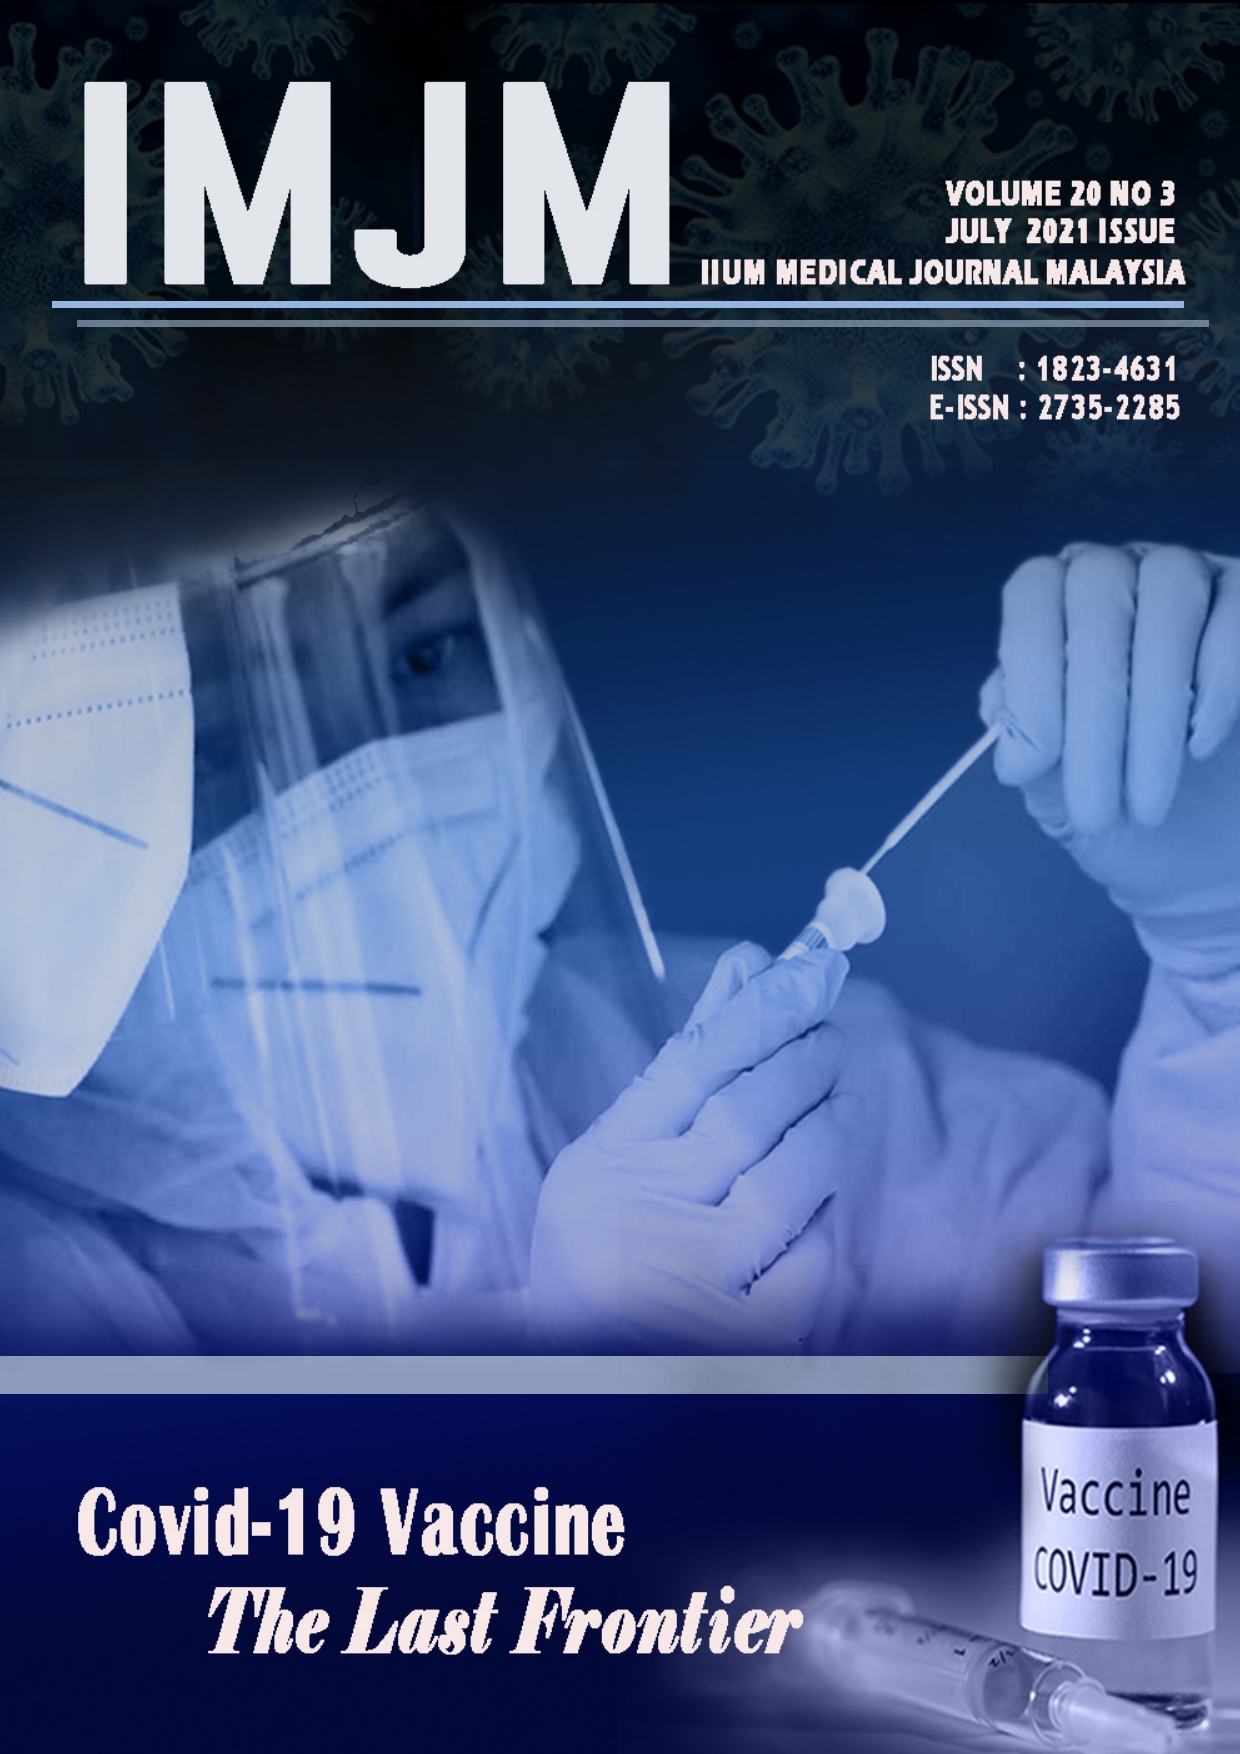 IIUM Medical Journal Malaysia